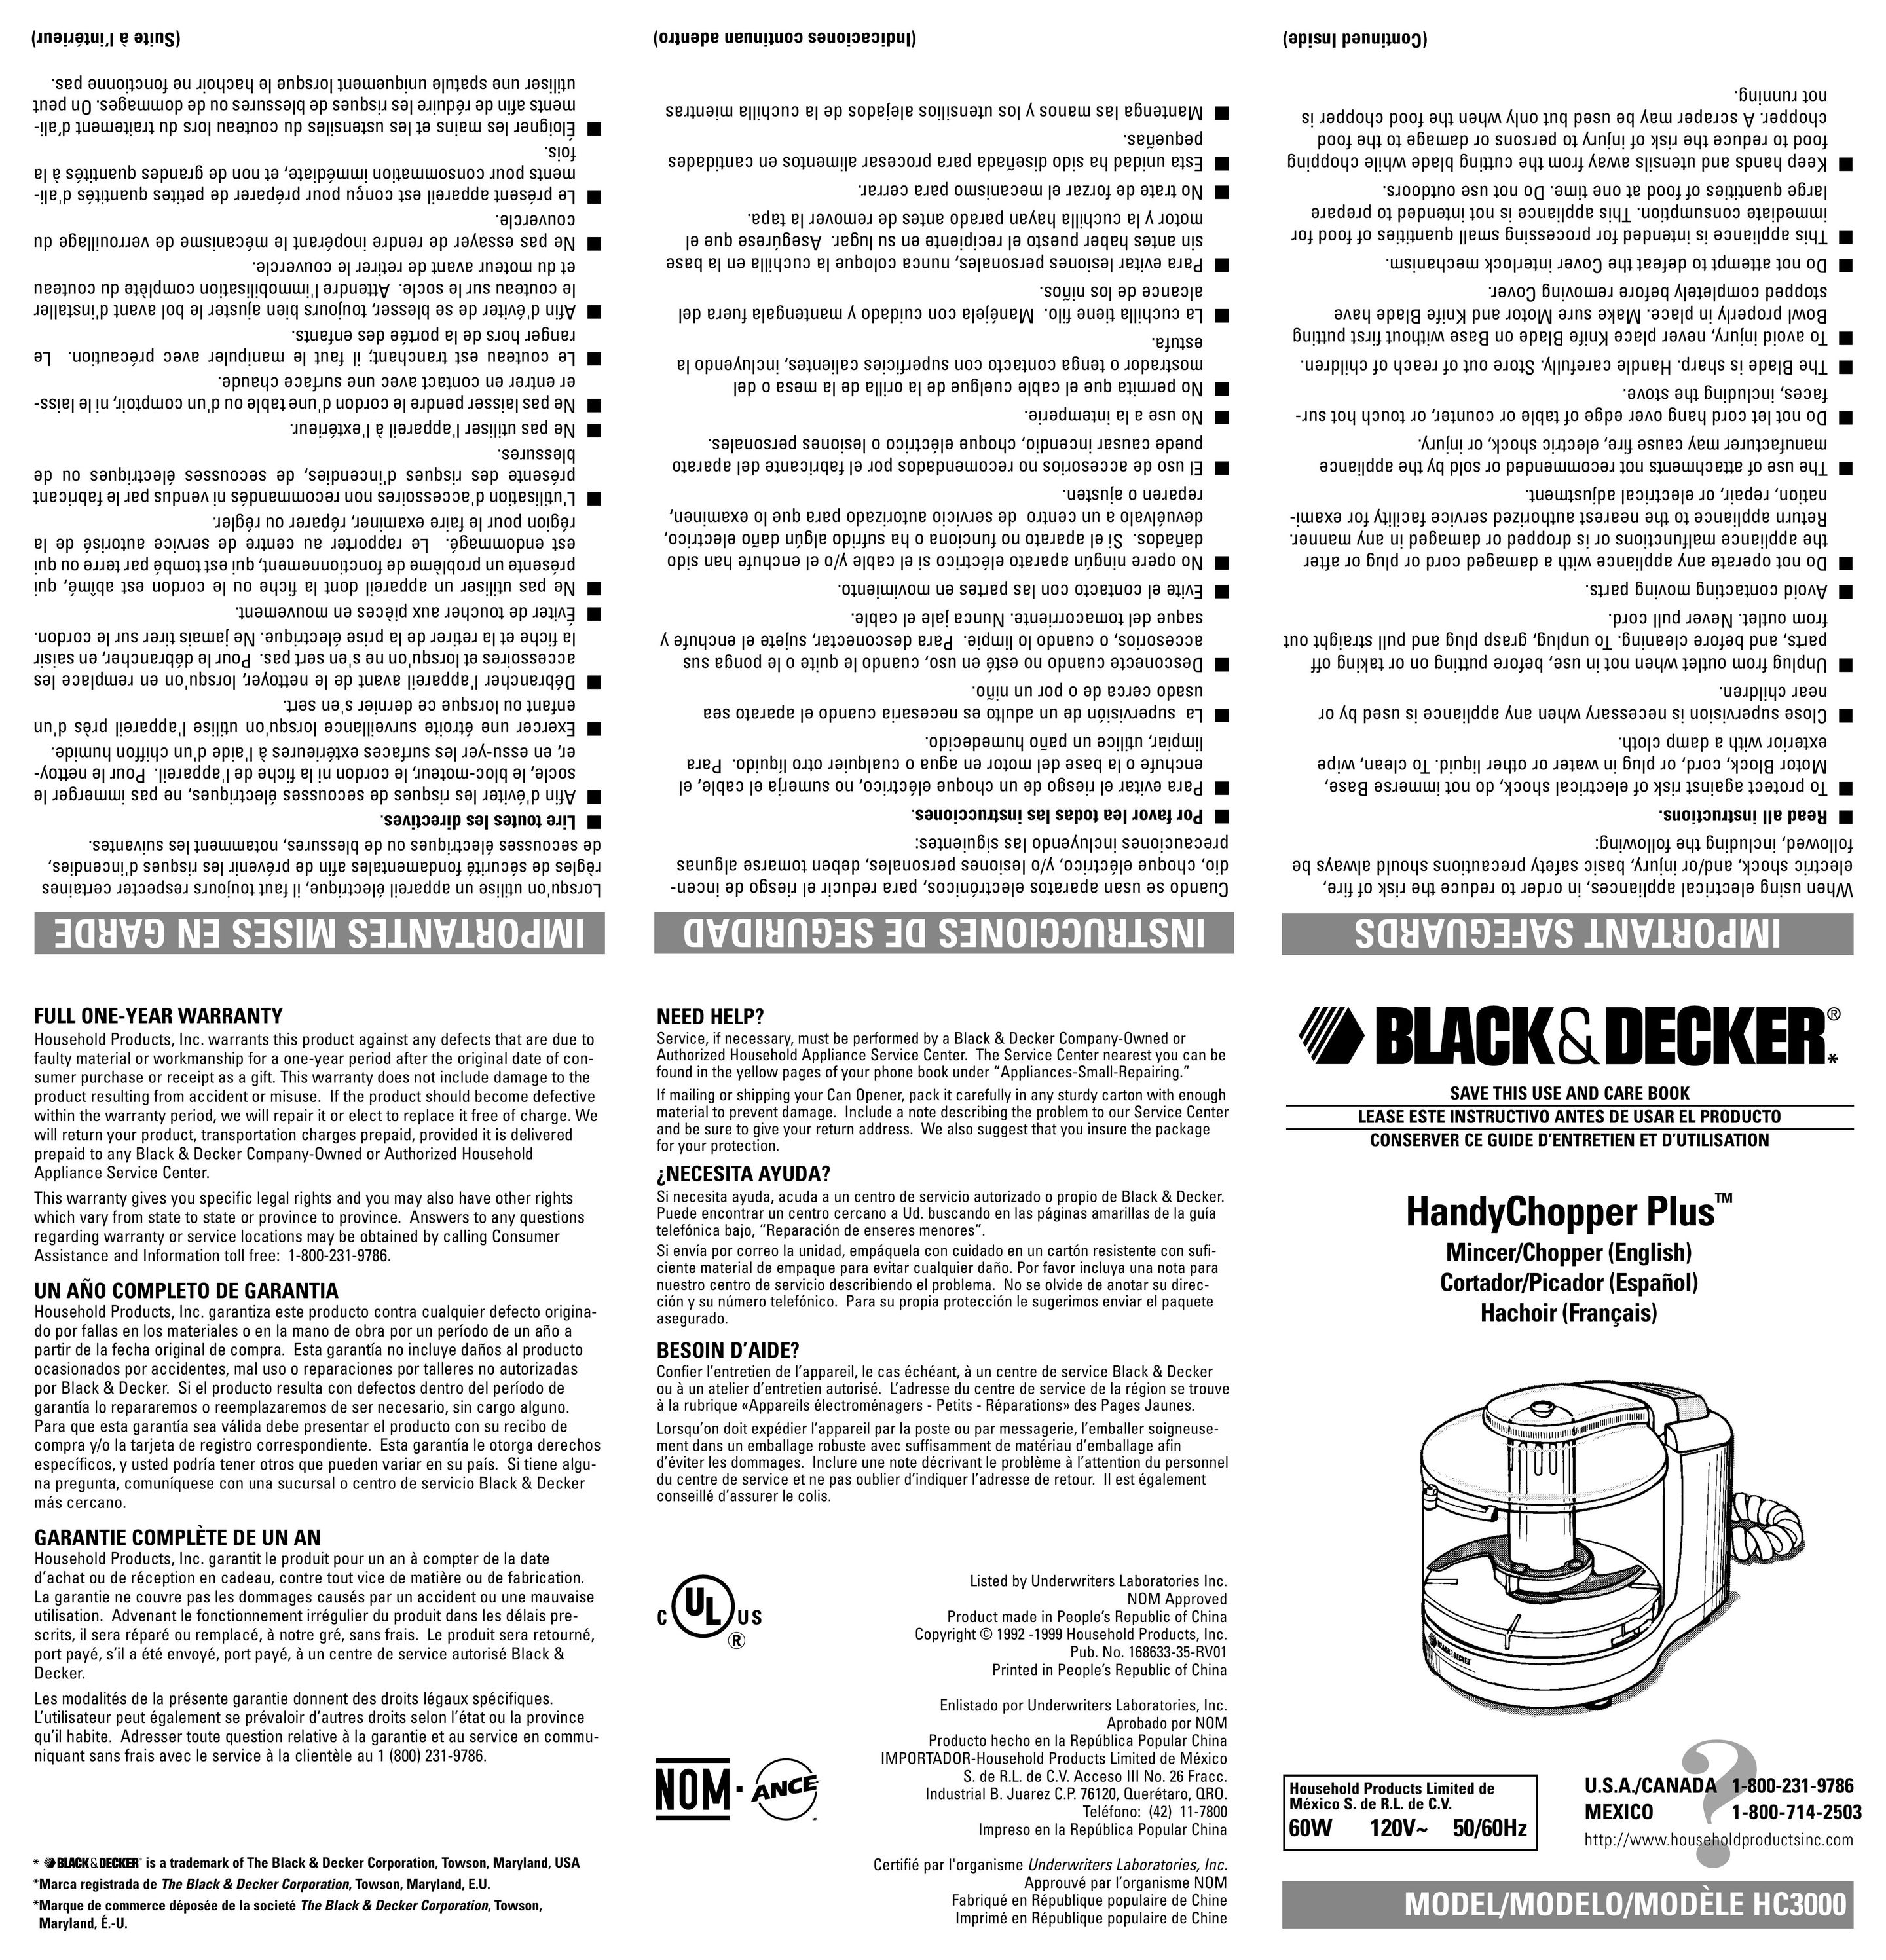 Black & Decker HC3000 Food Processor User Manual